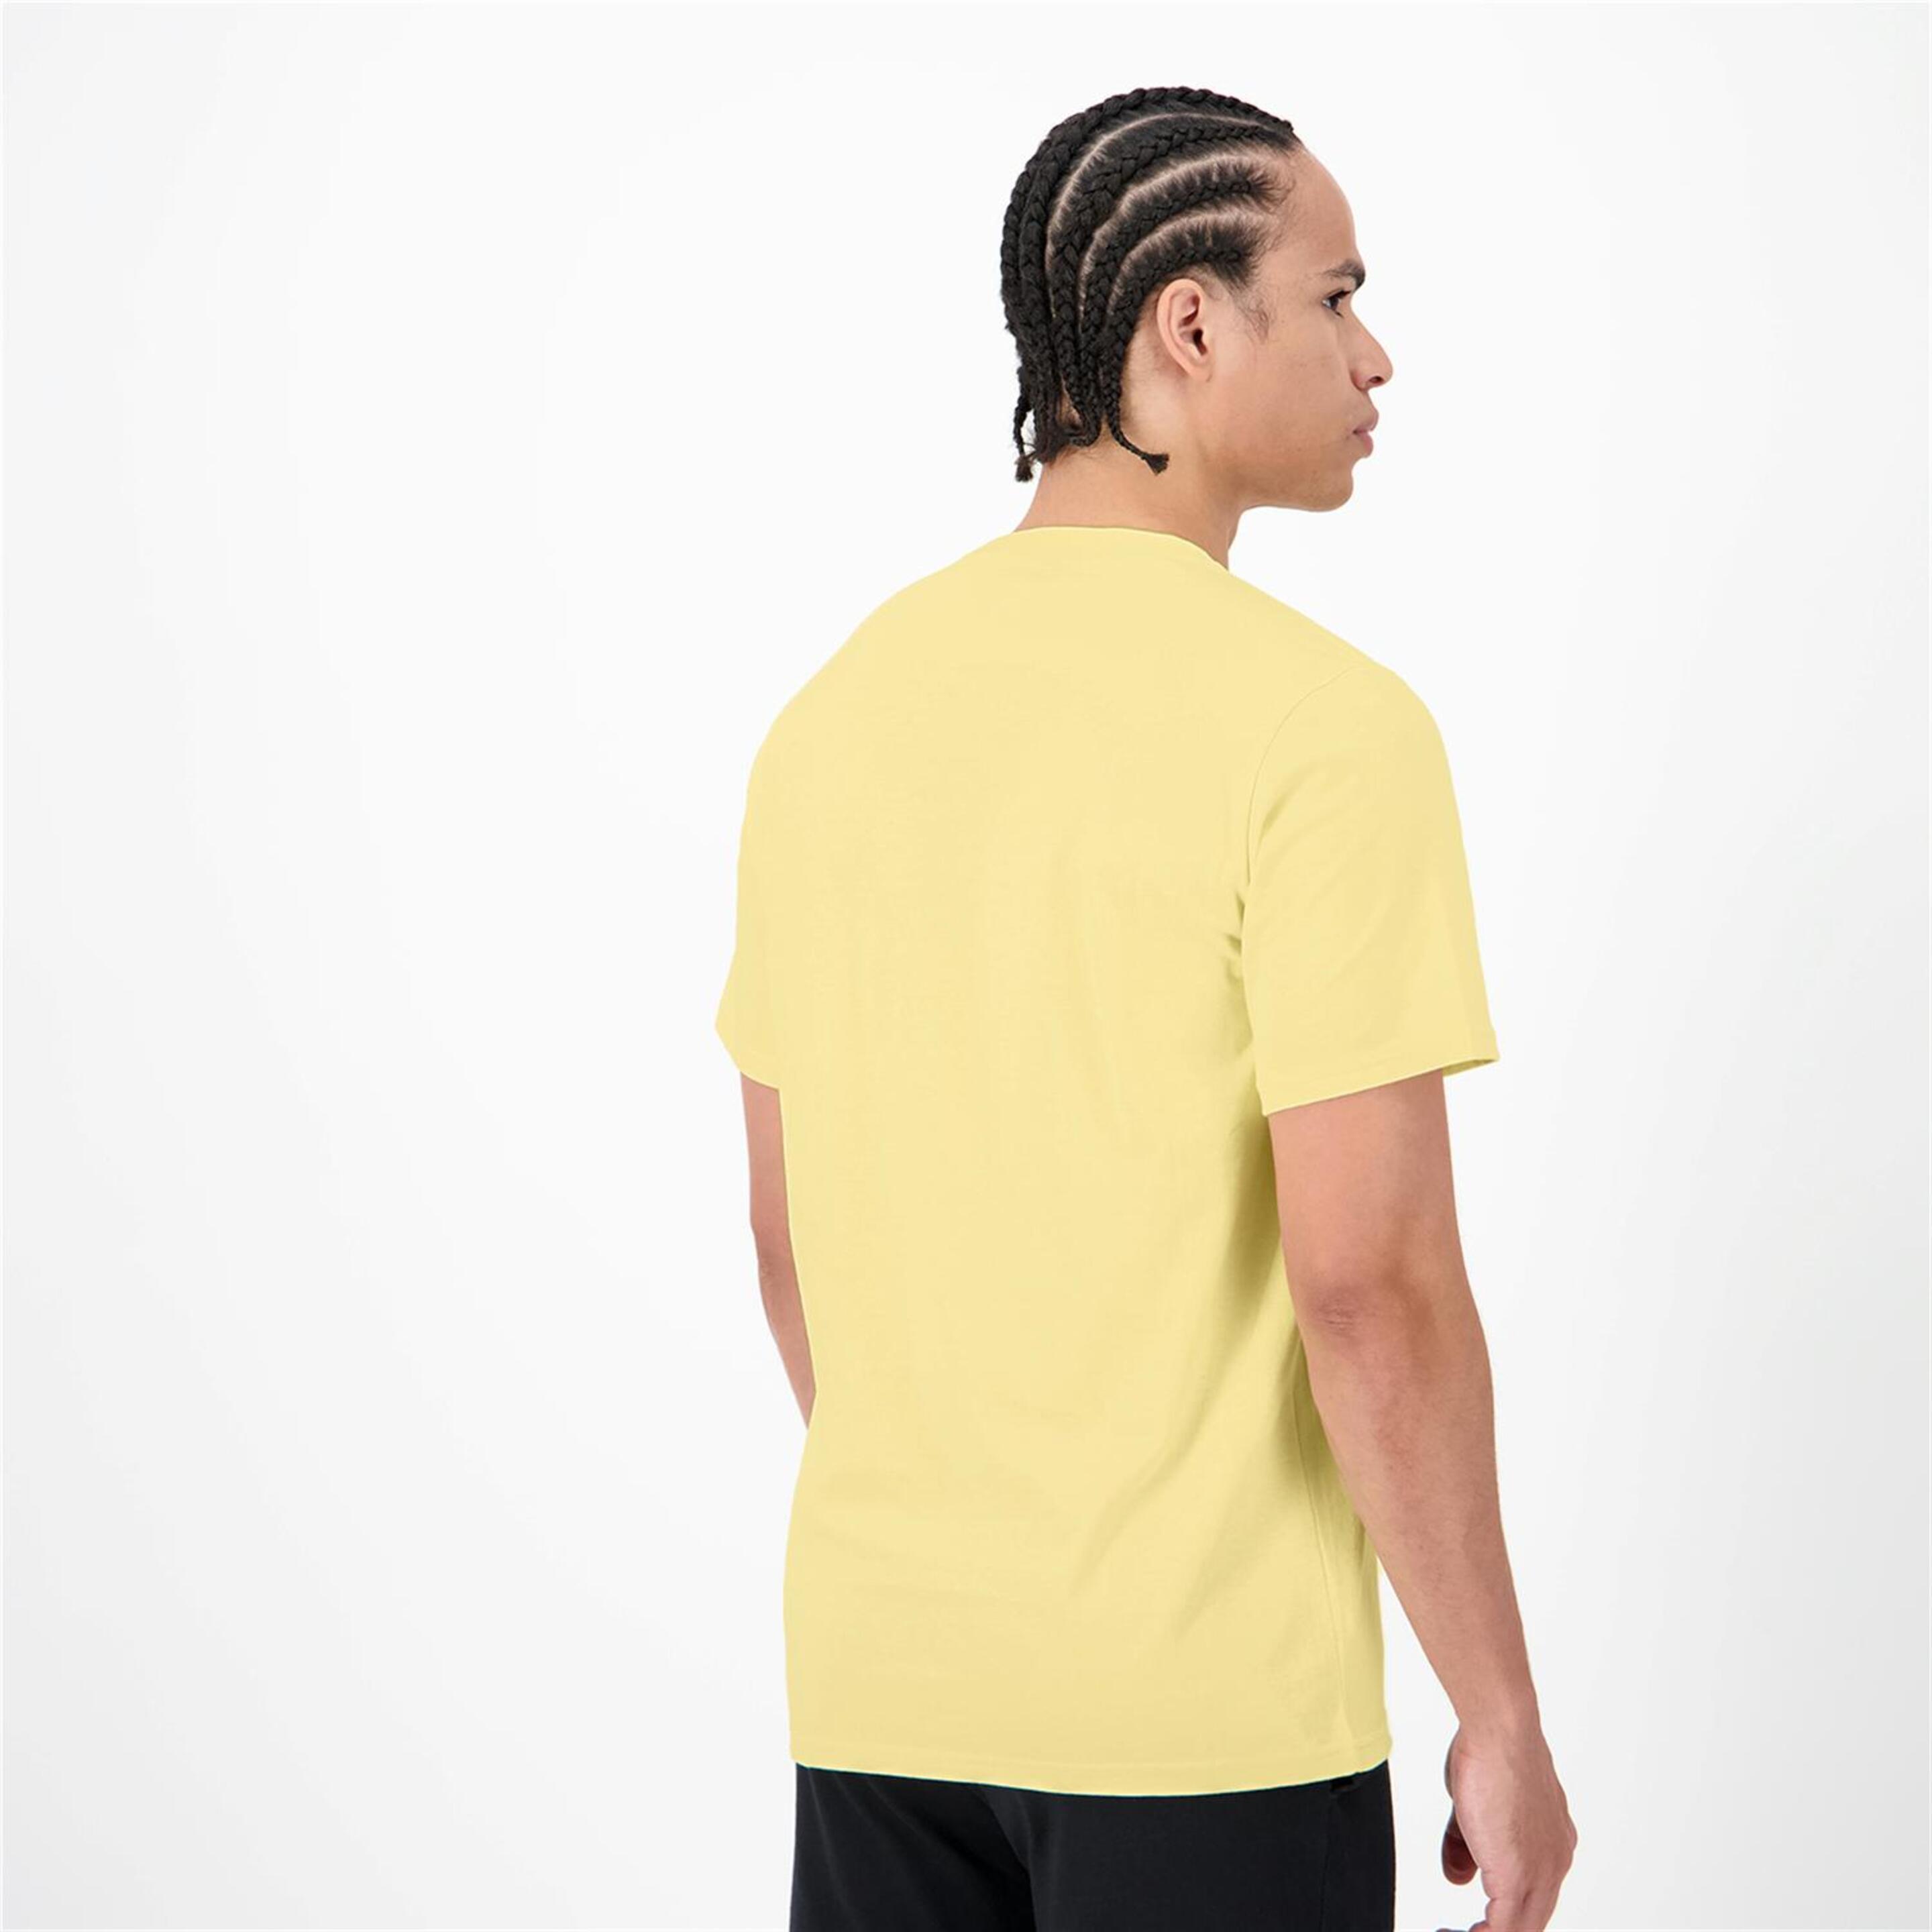 Converse Star Chevron - Amarelo - T-shirt Homem | Sport Zone